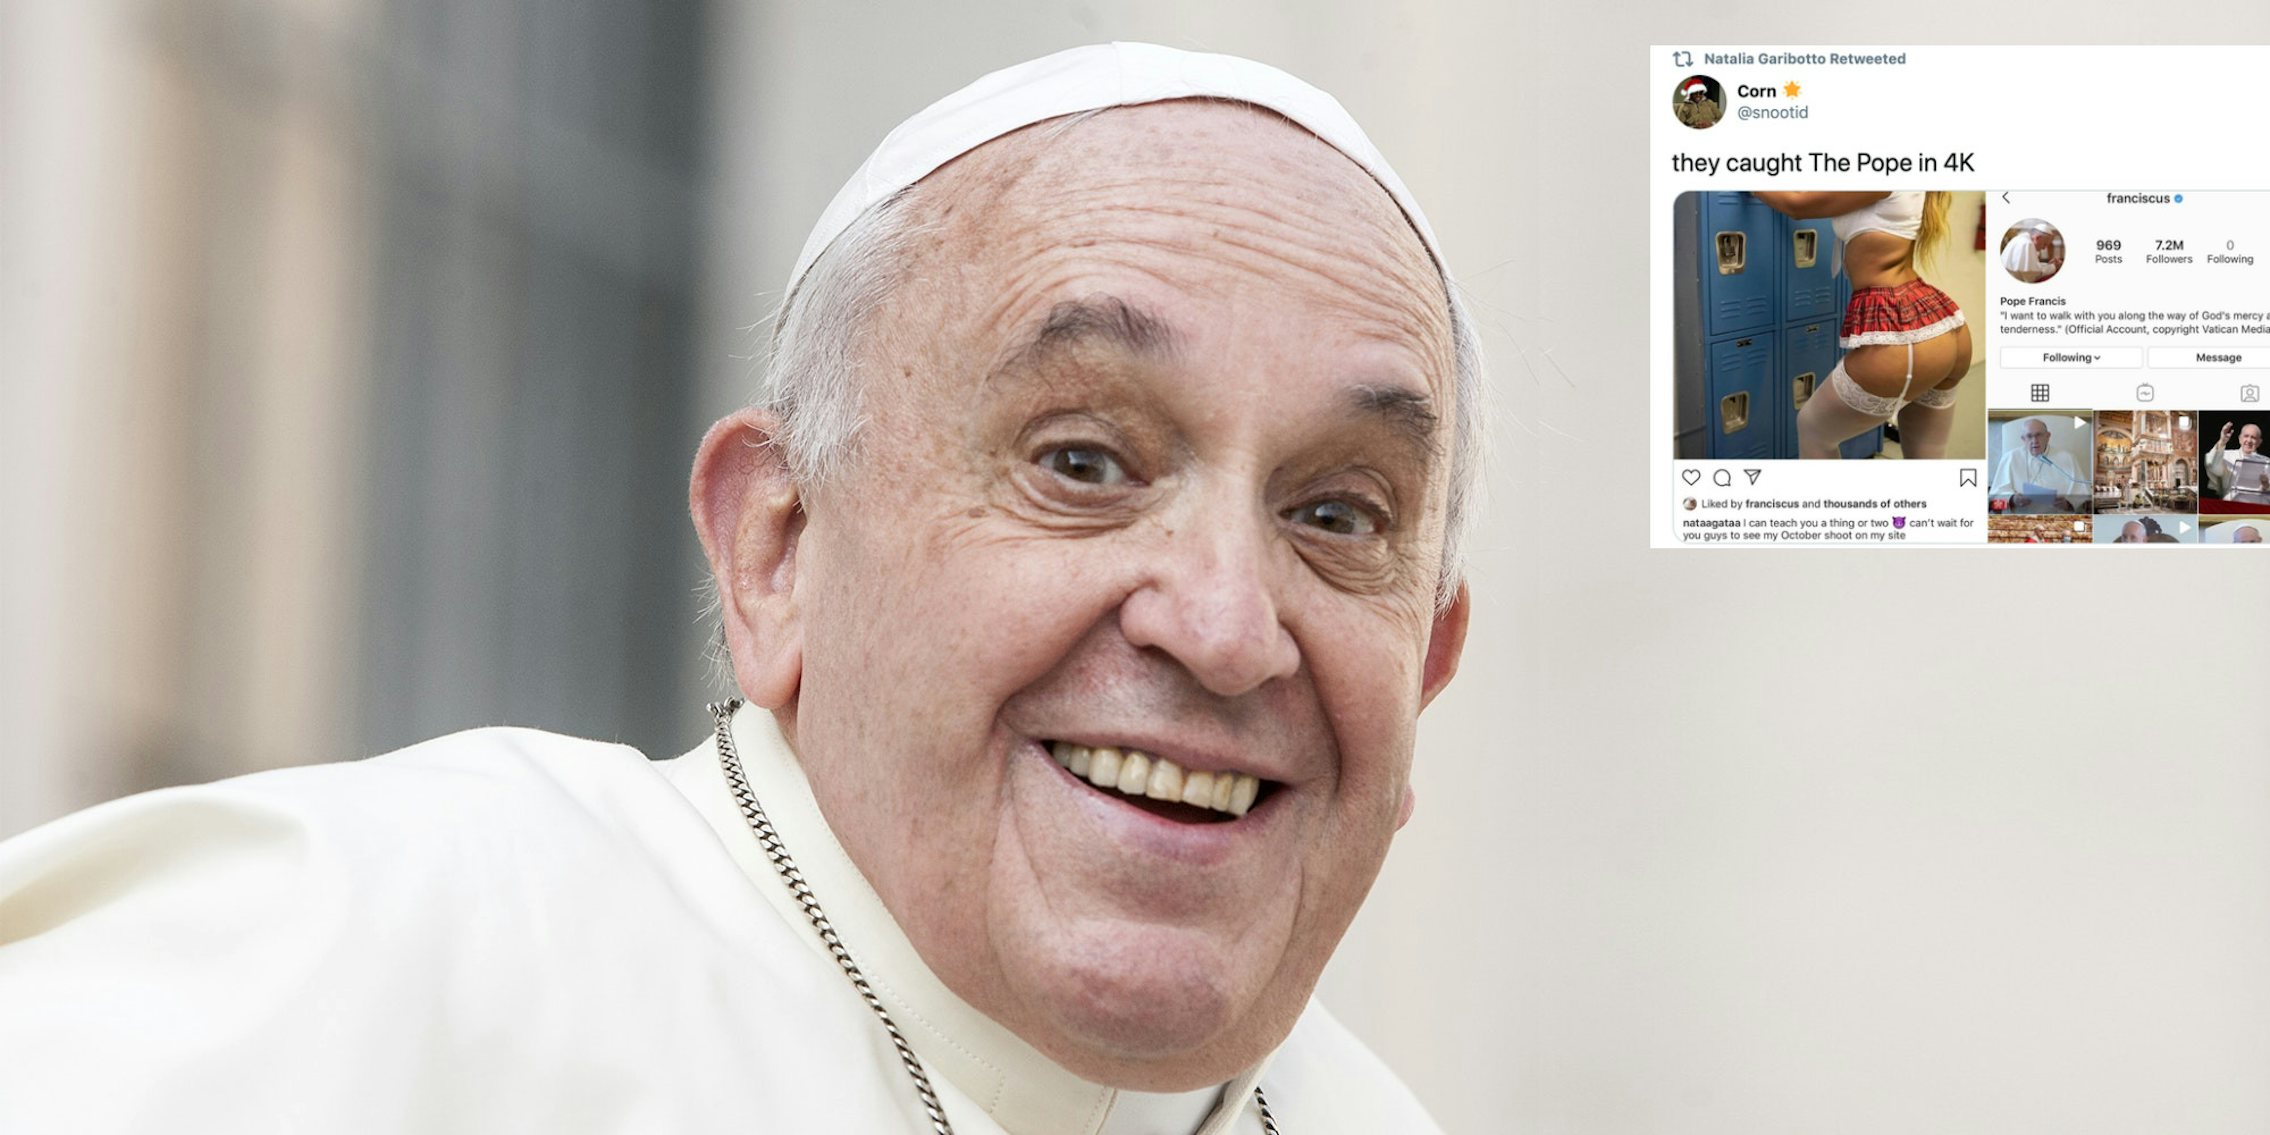 horny pope memes natalia garibotto